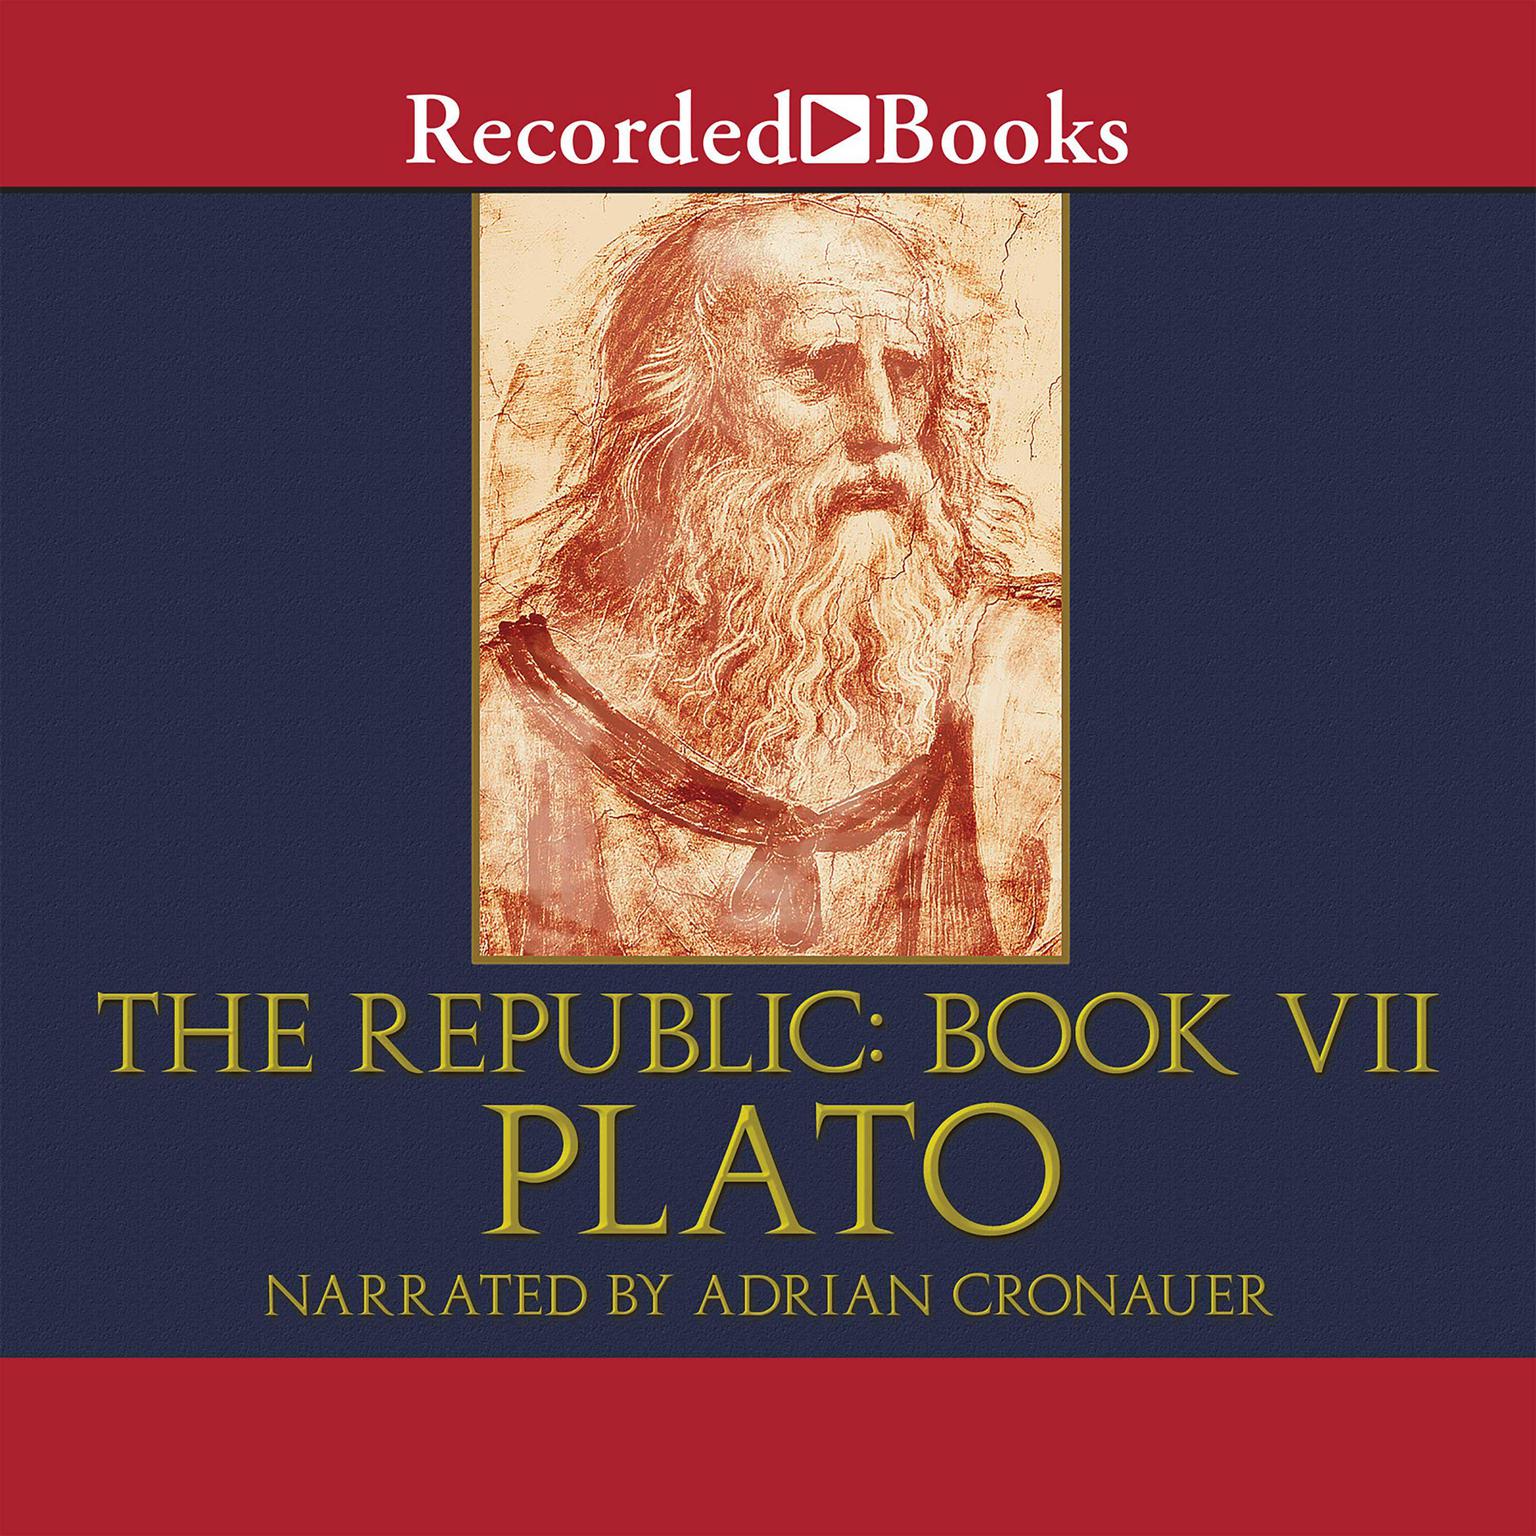 The Republic: Book VII: Book VII Audiobook, by Plato